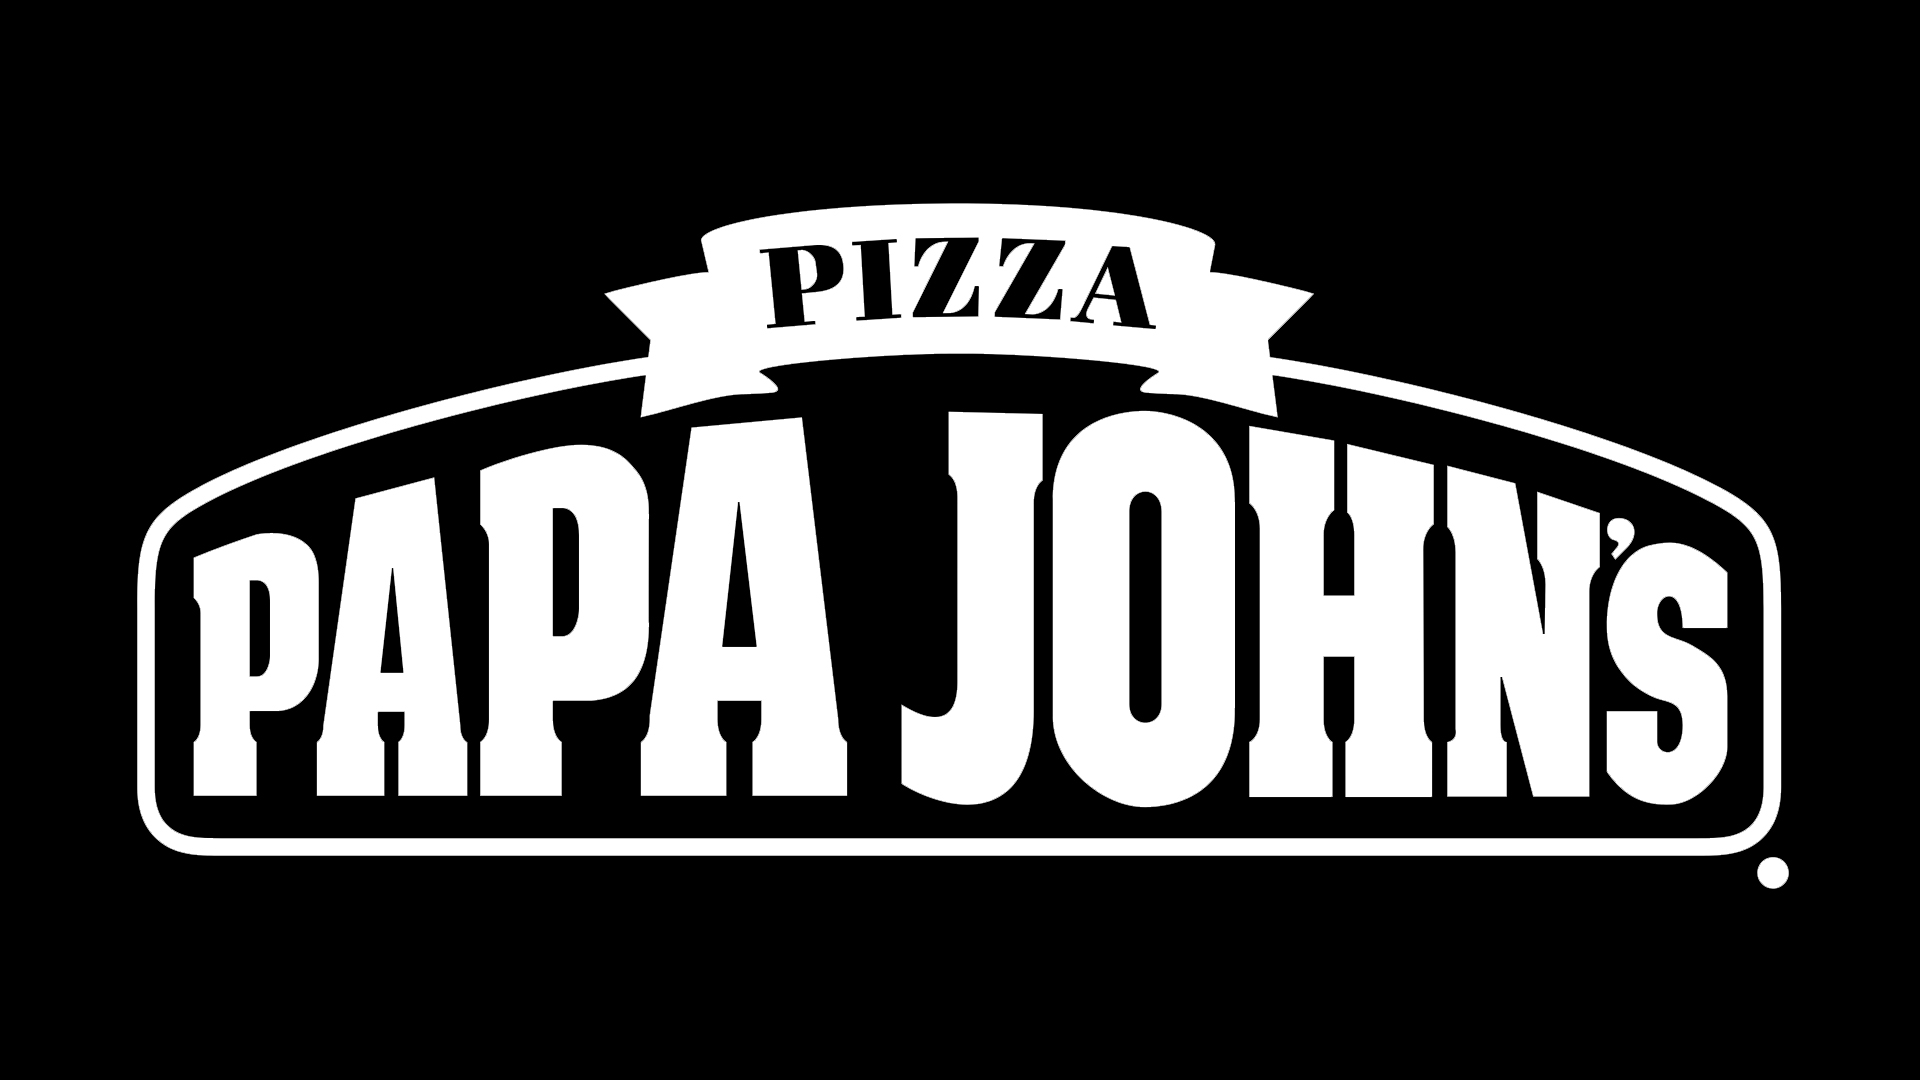 Download Papa Johns Logo Vector at Vectorified.com | Collection of Papa Johns Logo Vector free for ...